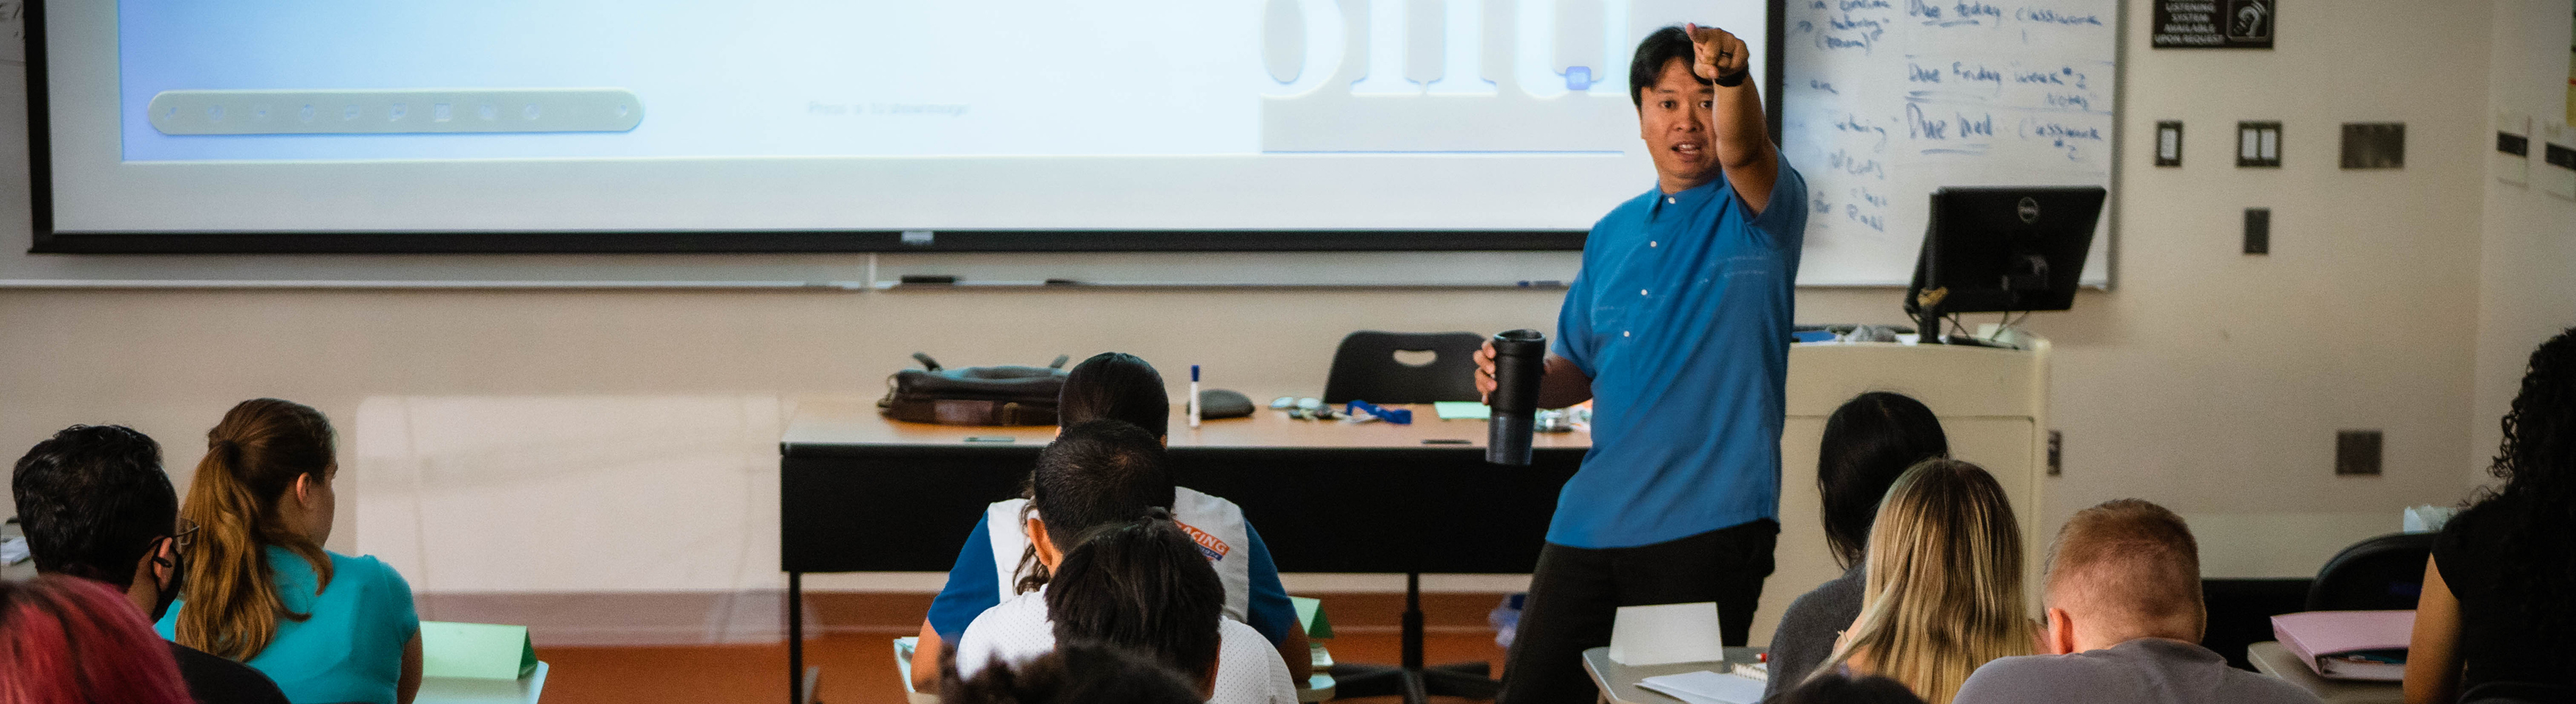 Professor Cirian Villavicencio teaching to students in classroom